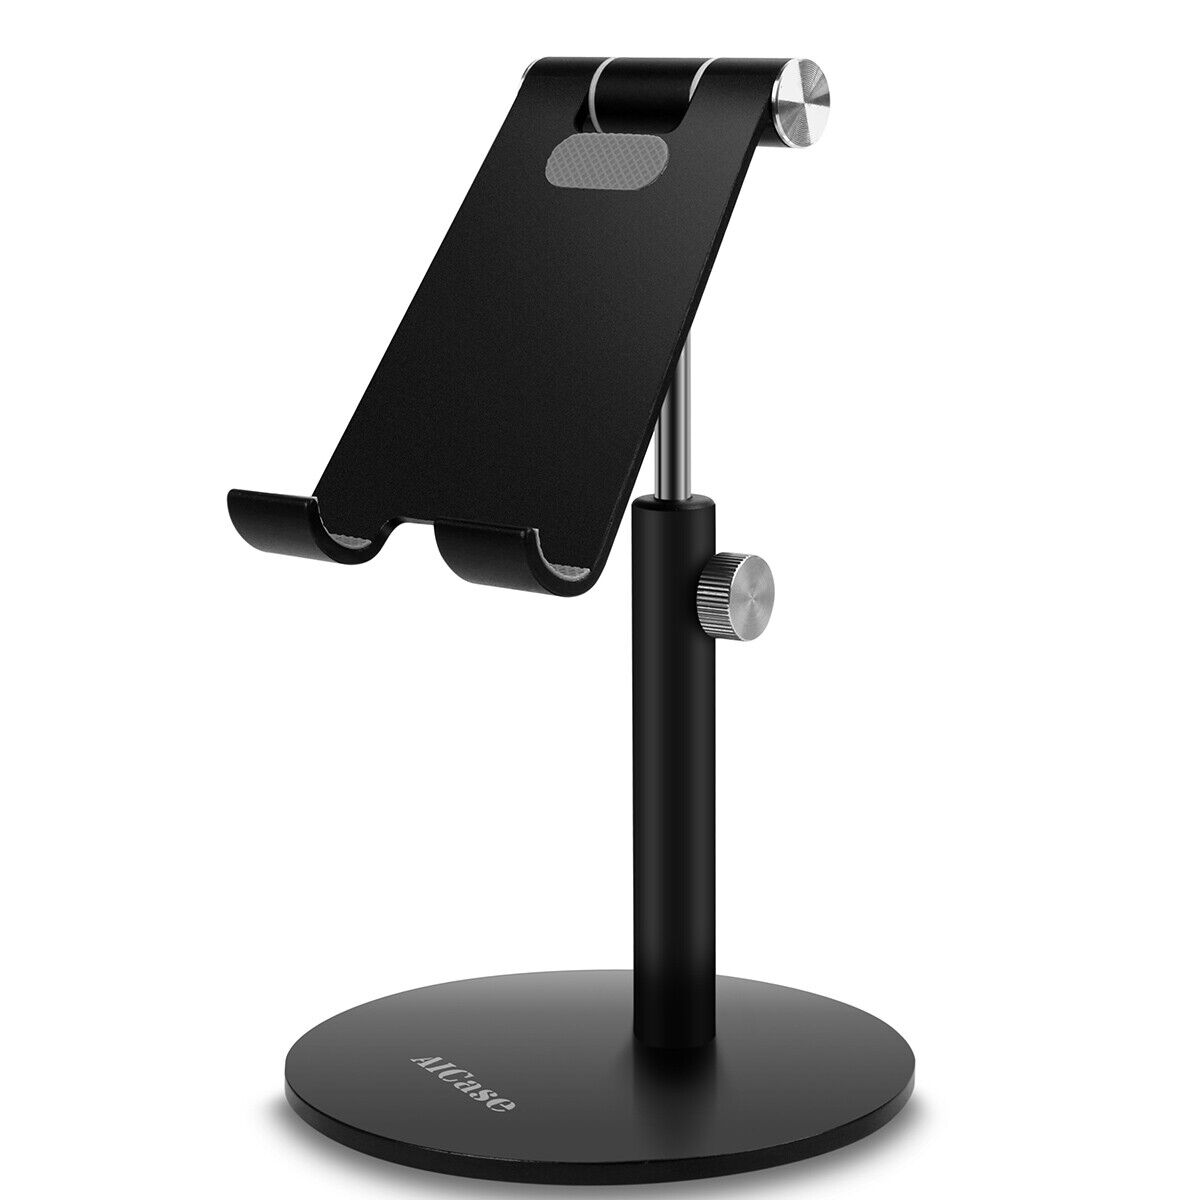 Adjustable Universal Tablet Stand Desktop Holder Mount Mobile Phone iPad iPhone